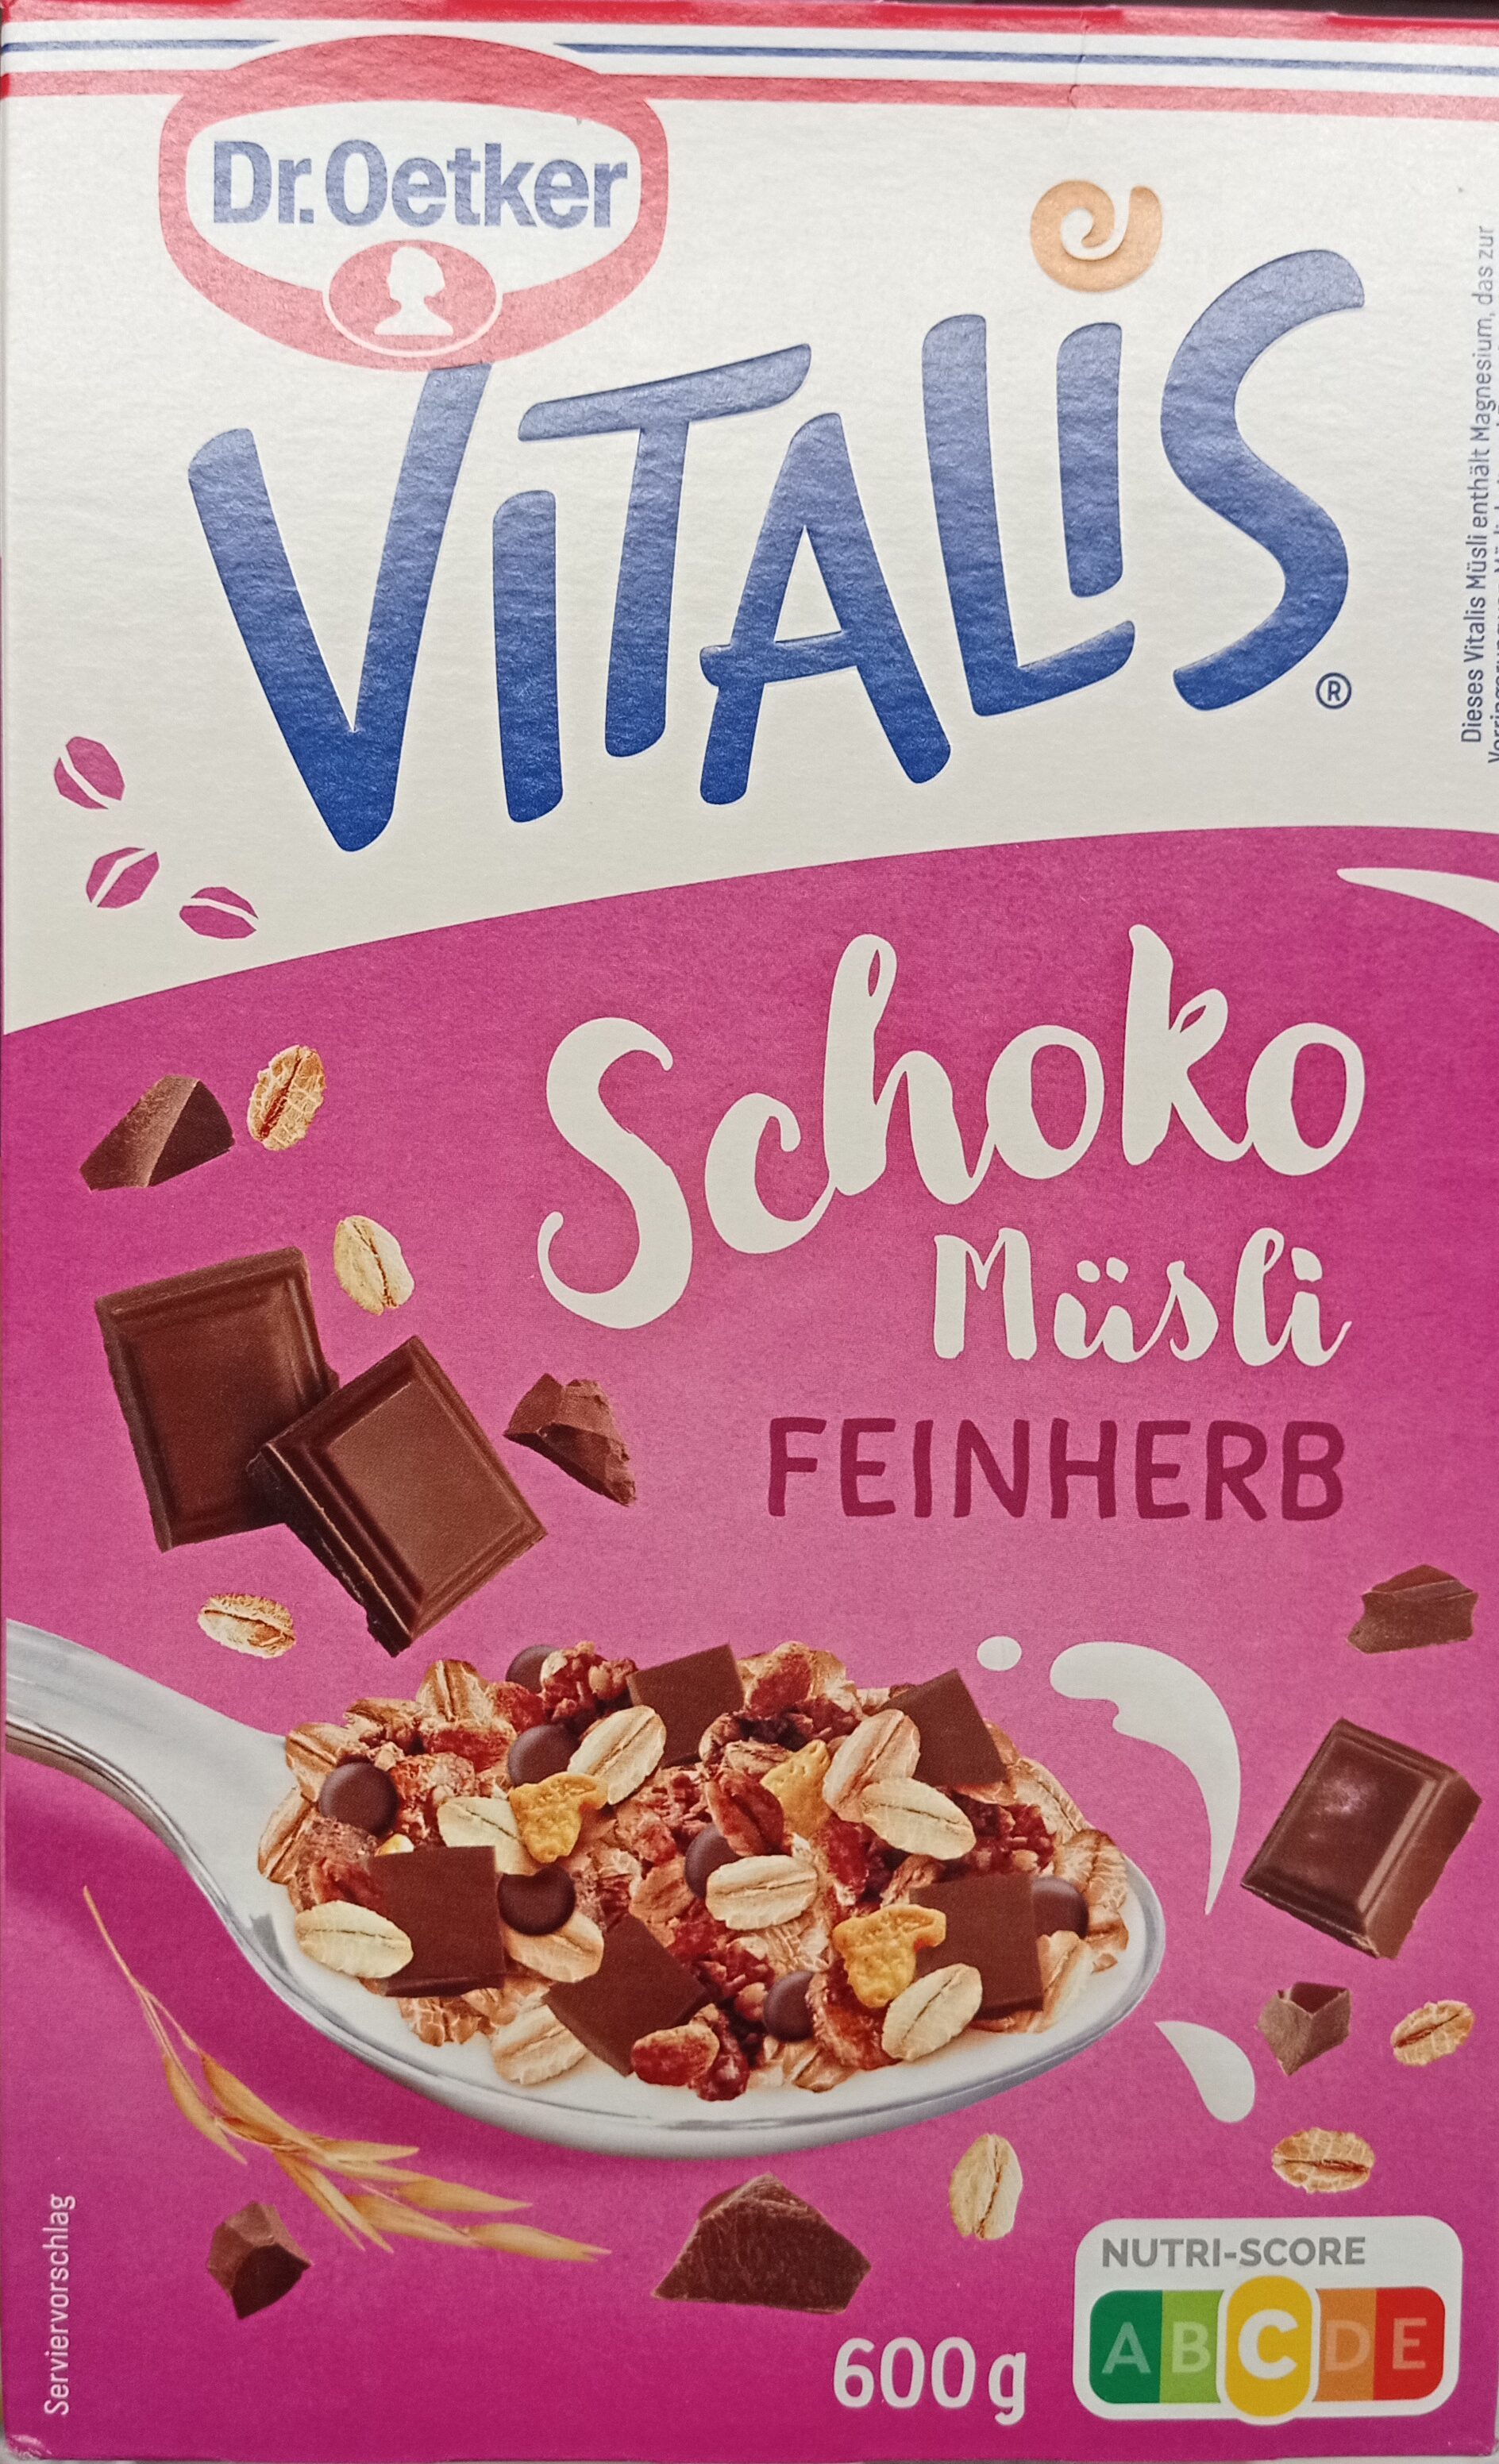 Vitalis Schoko Müsli feinherb - Product - de